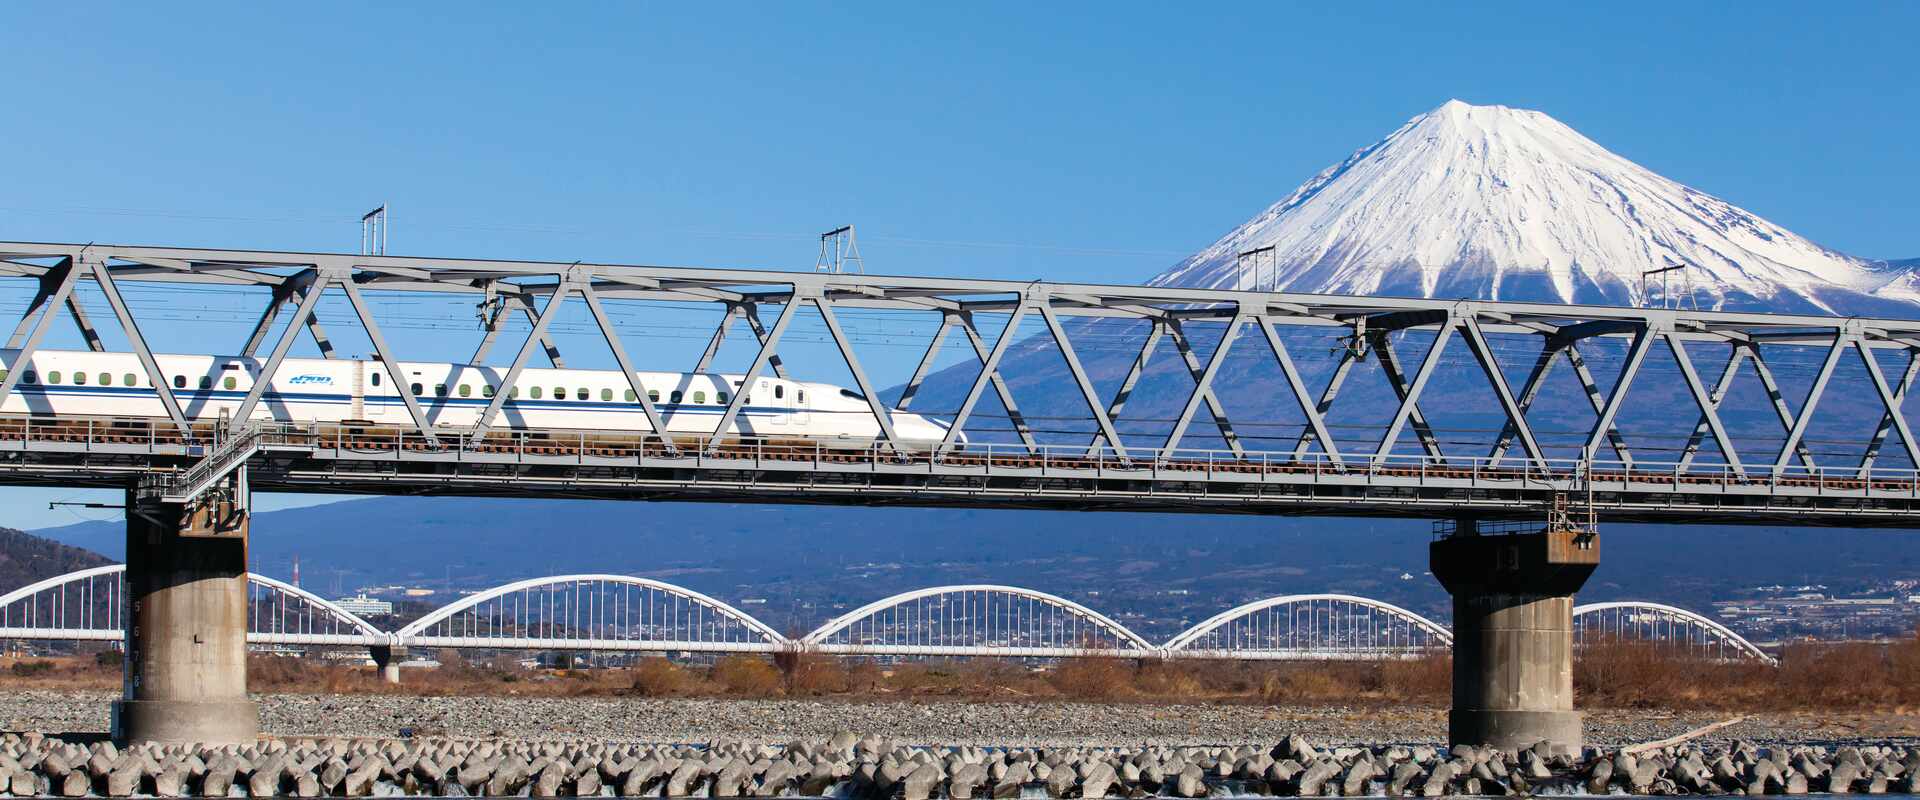 View of Bullet Train going over bridge in front of Mt Fuji, Japan